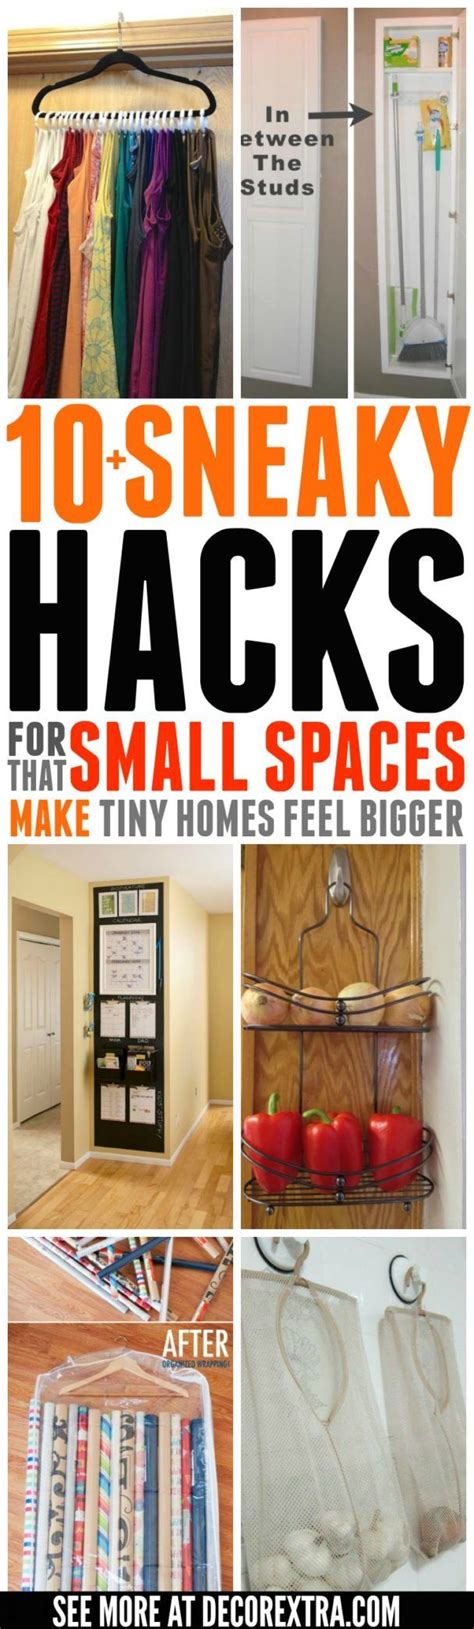 10 Small Space Living Hacks That Make Tiny Homes Feel Bigger Small